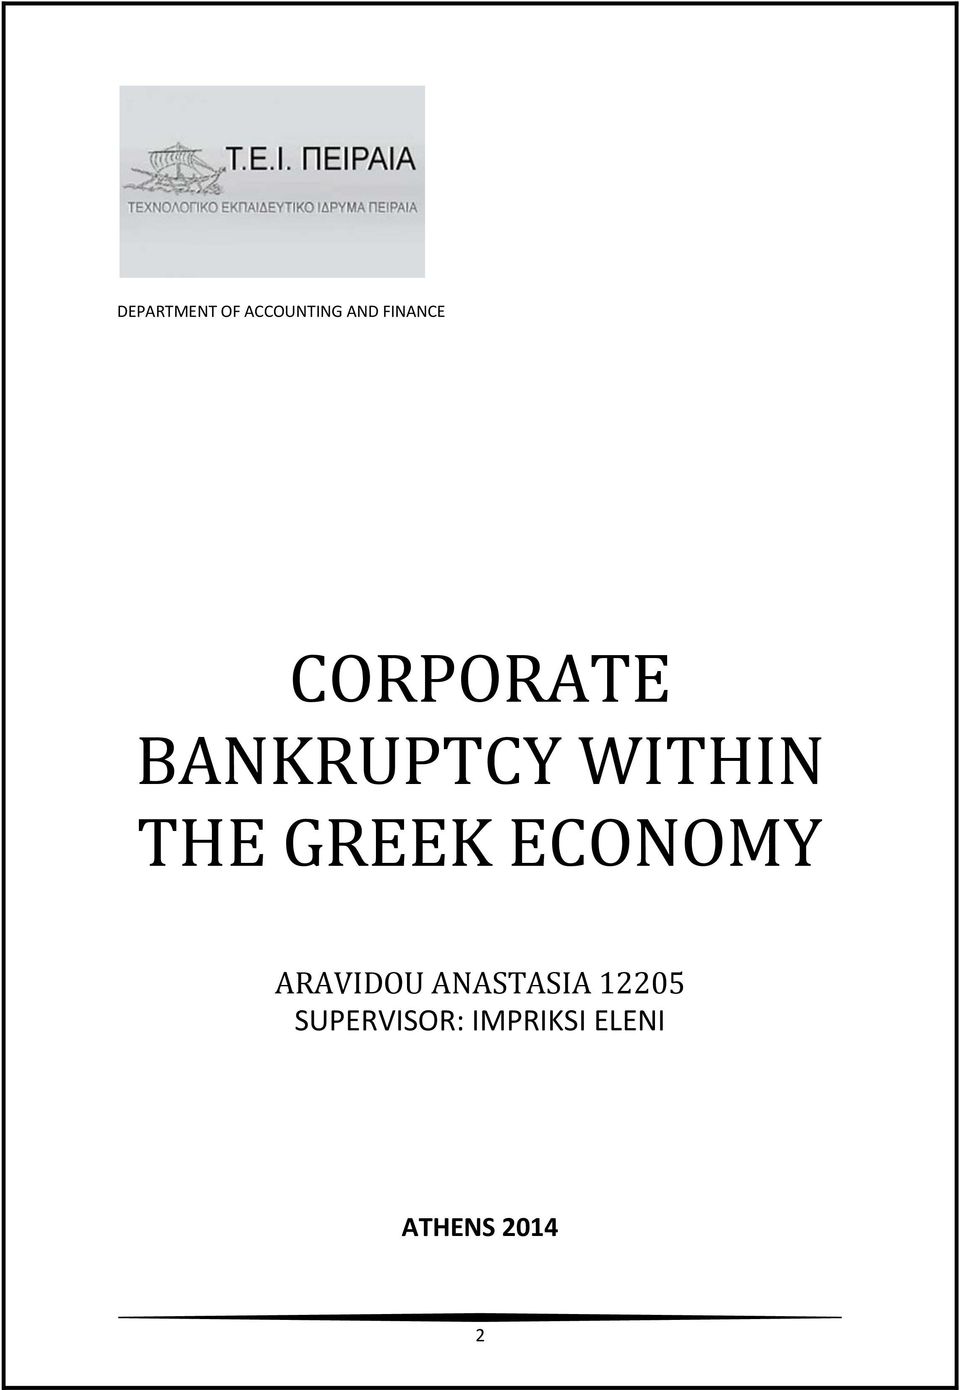 GREEK ECONOMY ARAVIDOU ANASTASIA